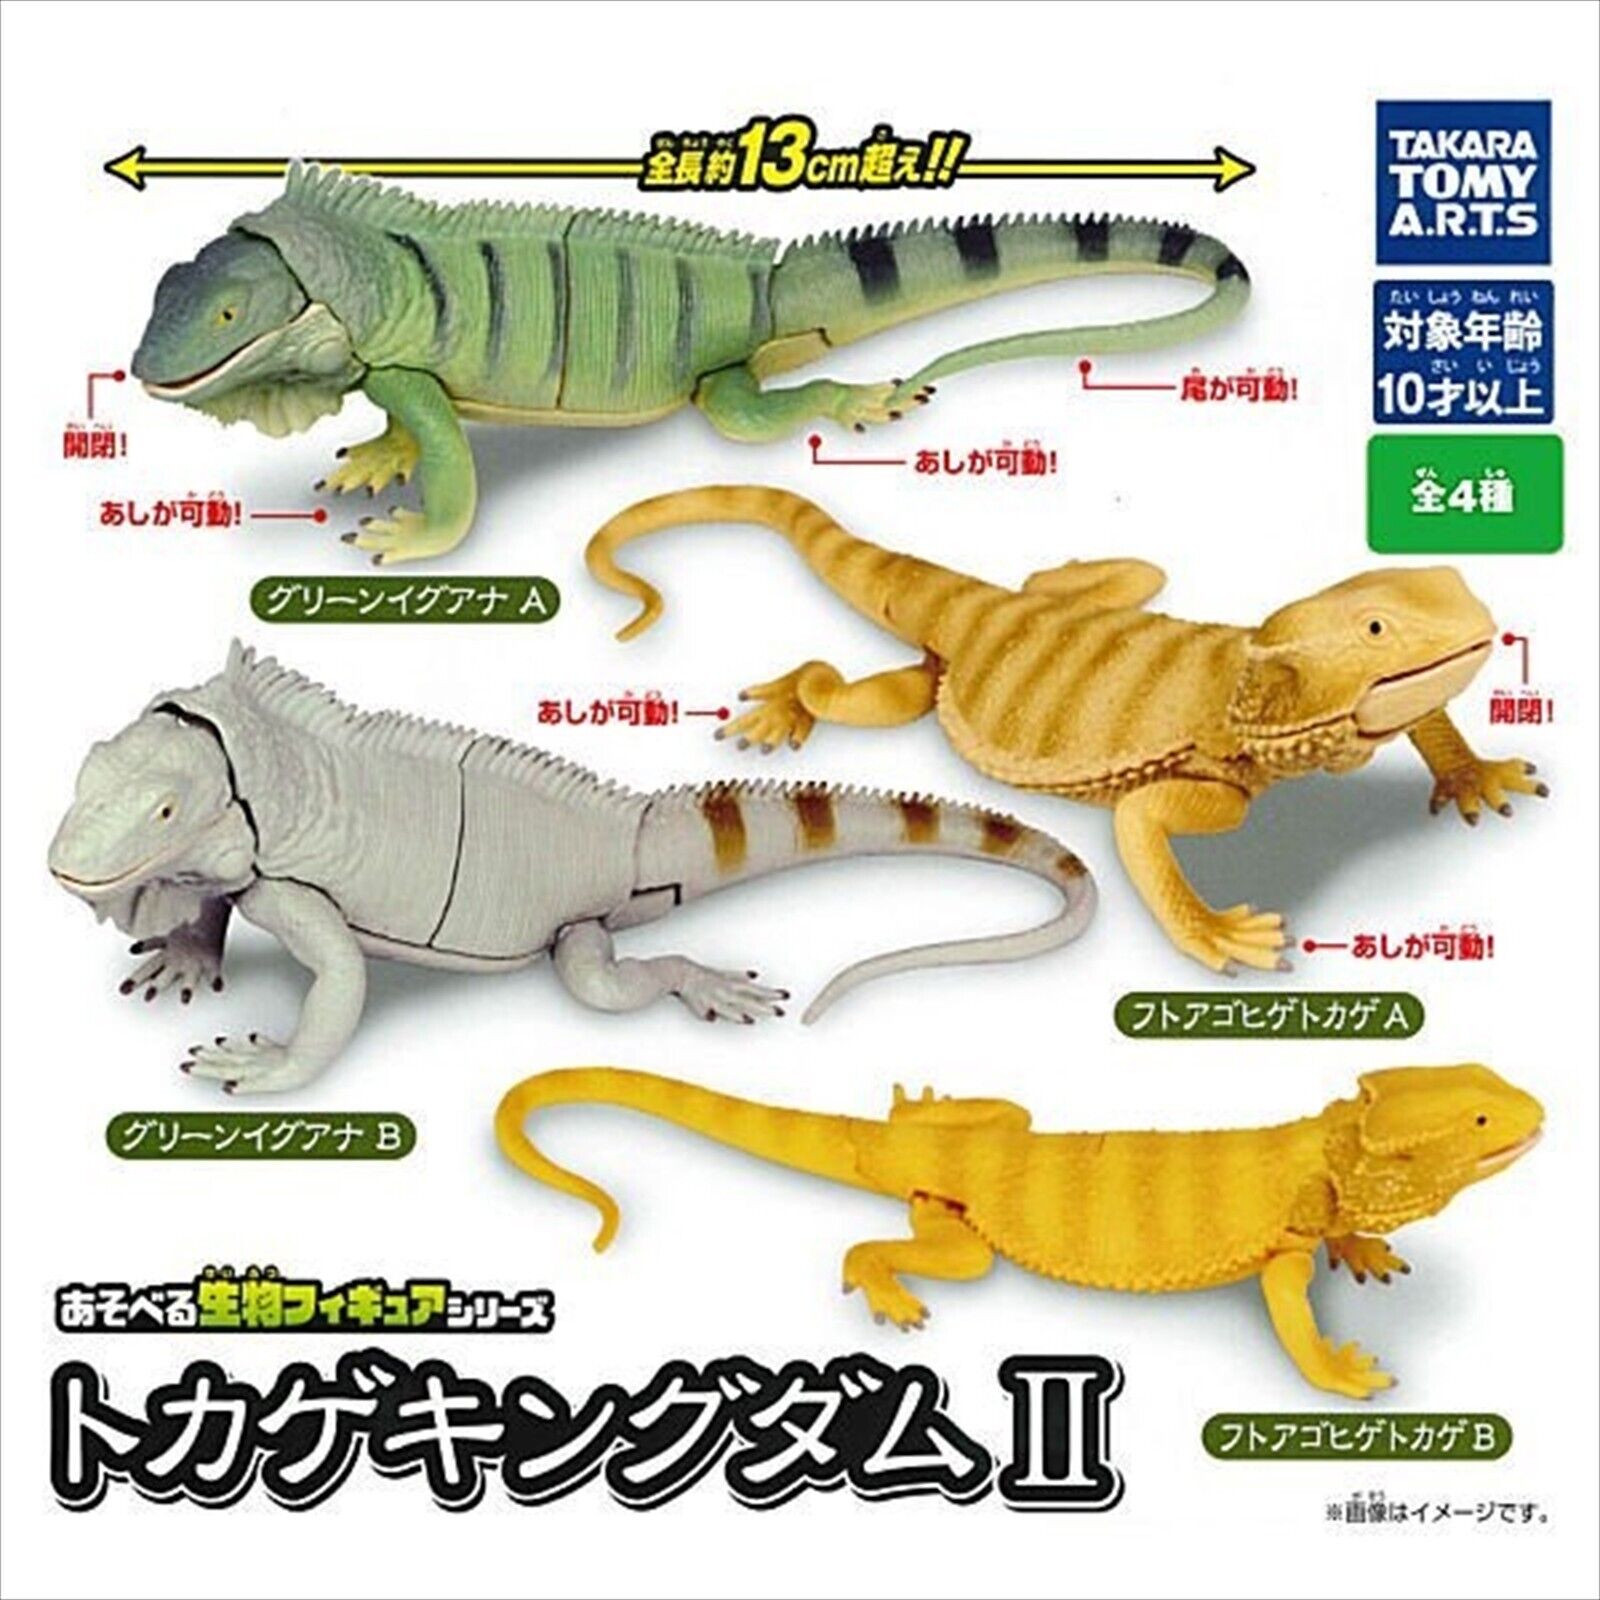 Lizard kingdom Playable Figure II Complete set T-Arts Capsule Toy gashapon